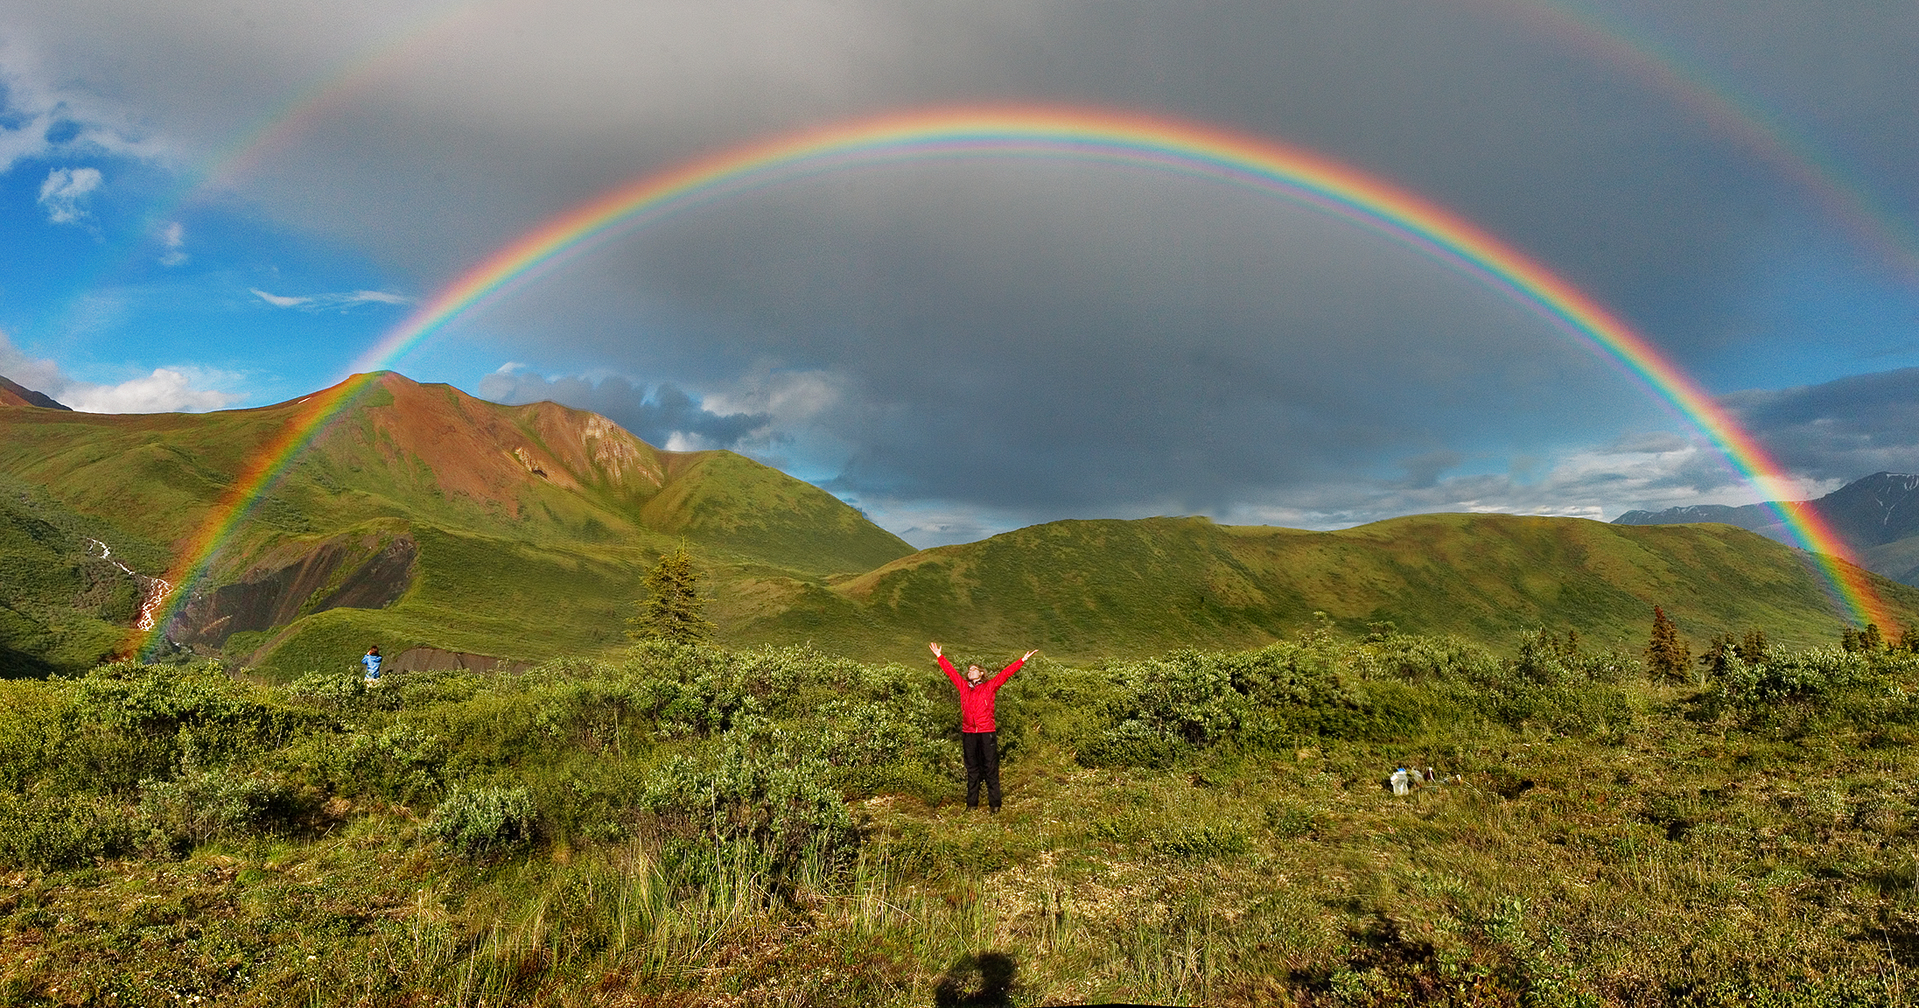 http://upload.wikimedia.org/wikipedia/commons/5/5c/Double-alaskan-rainbow.jpg